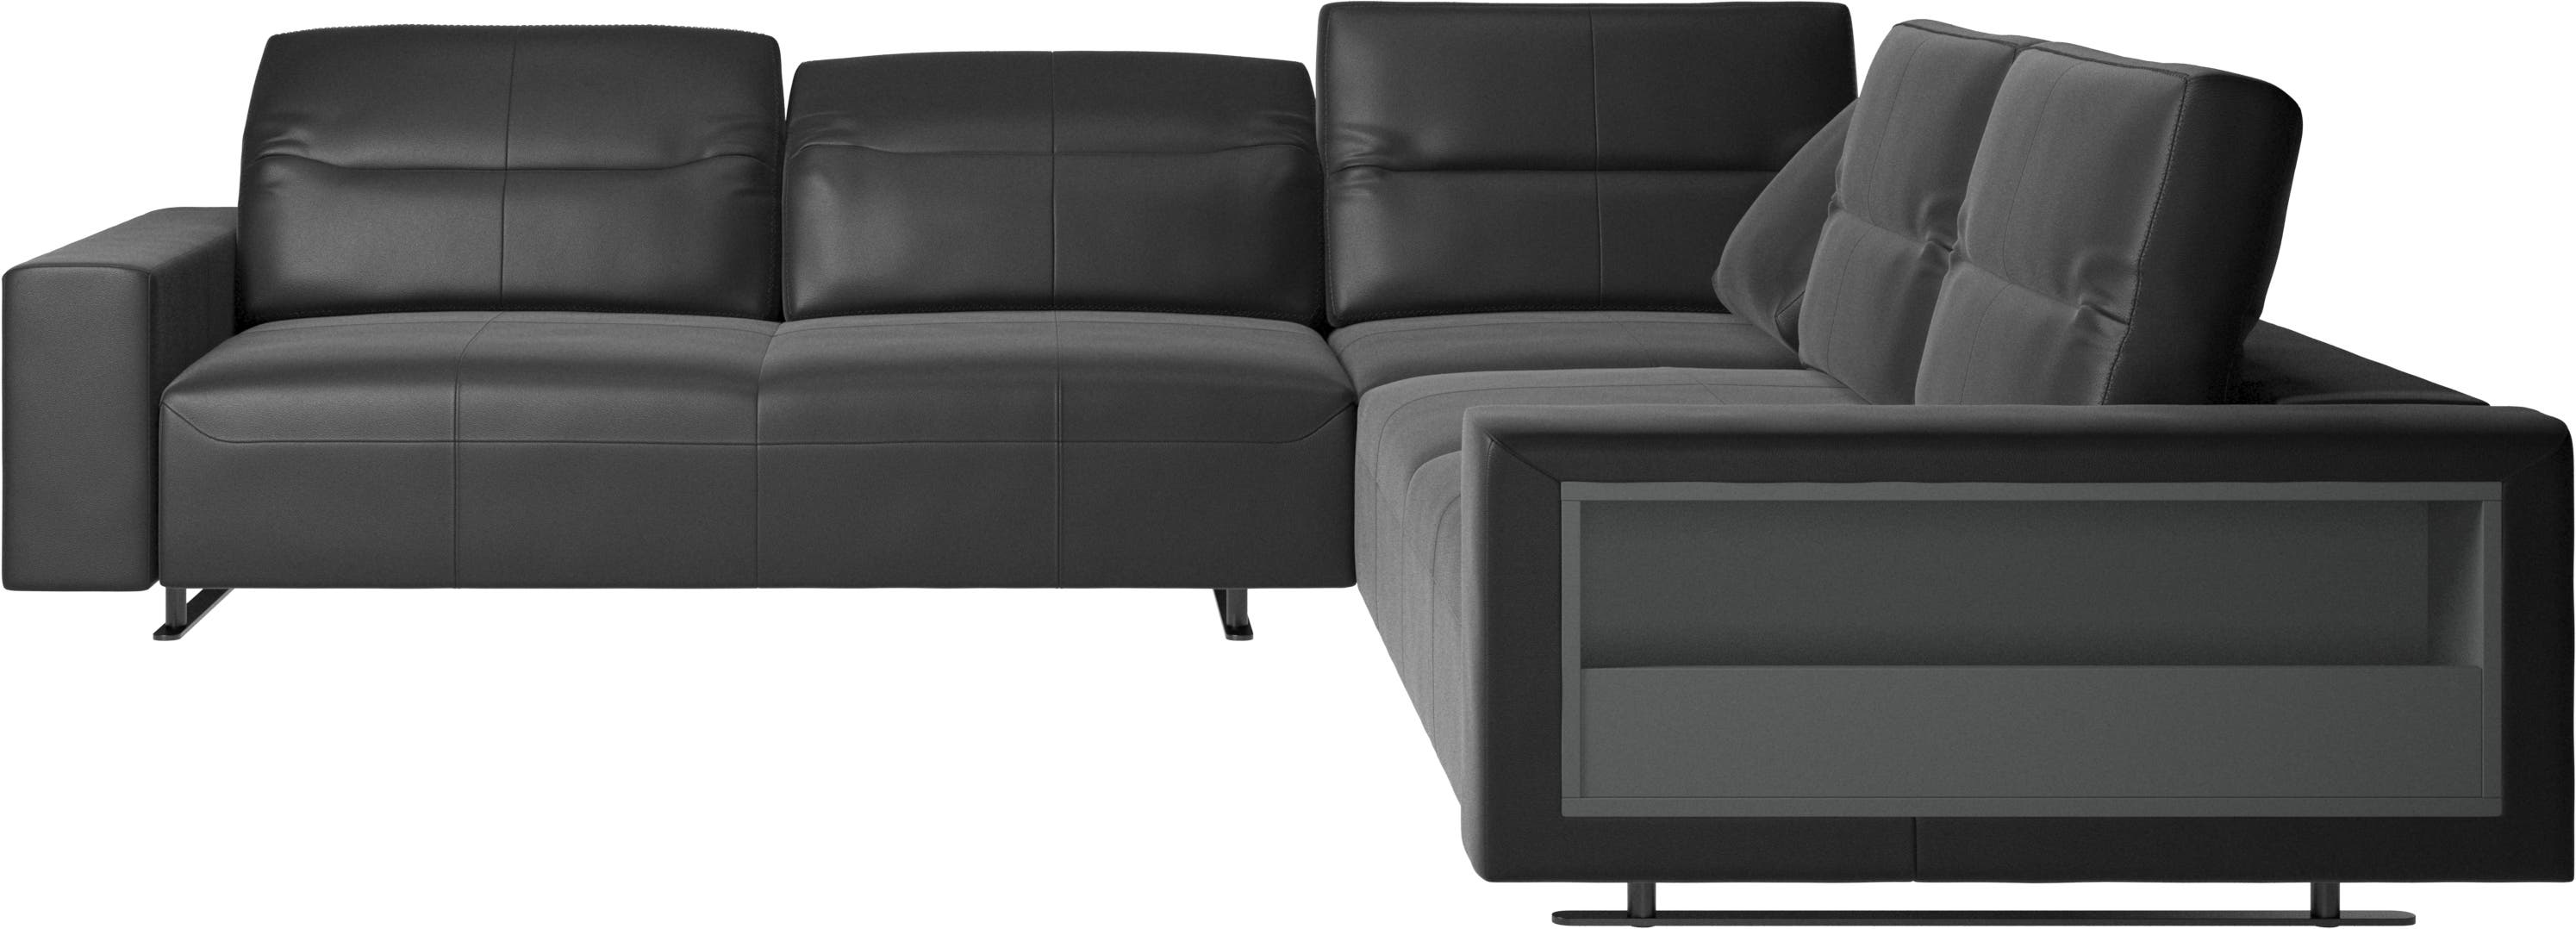 Hampton corner sofa with adjustable back and storage on right side